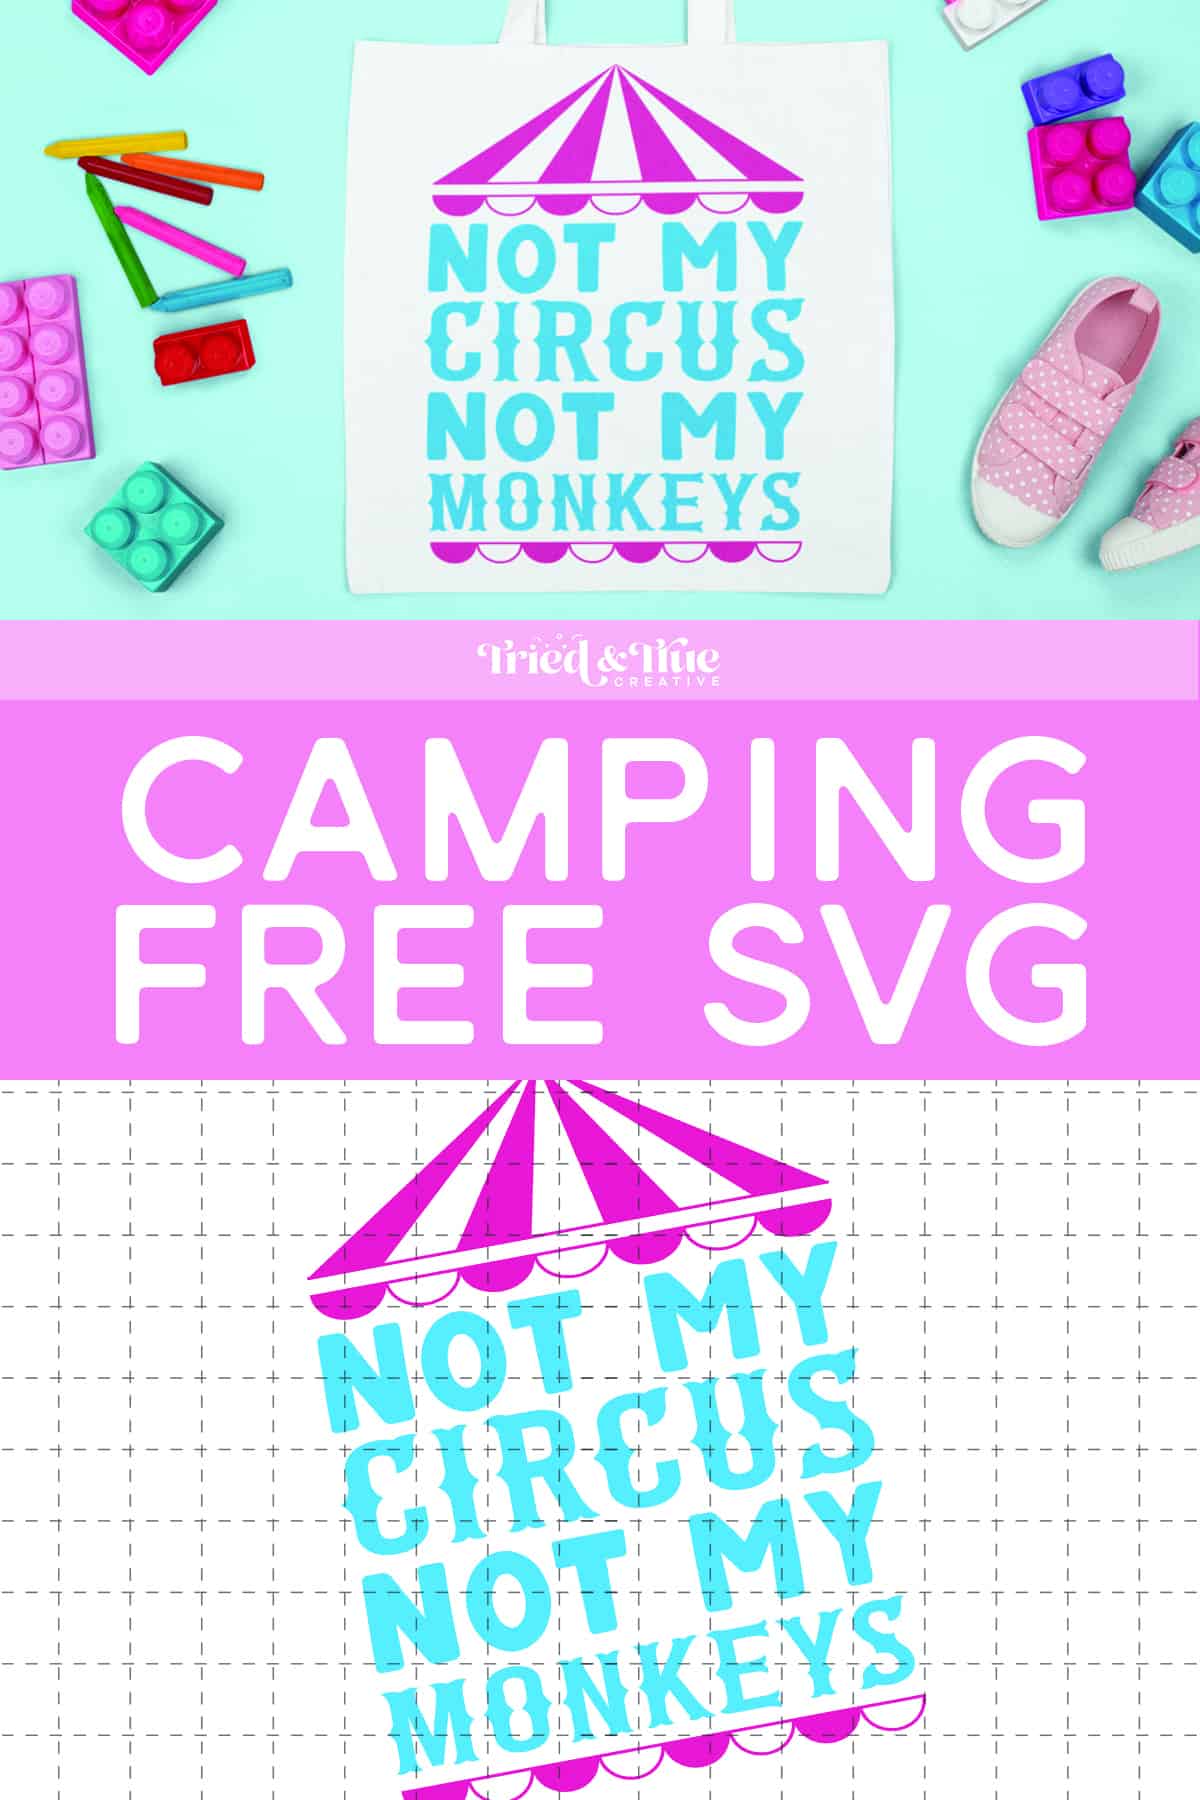 Camping free circus not monkeys svg.